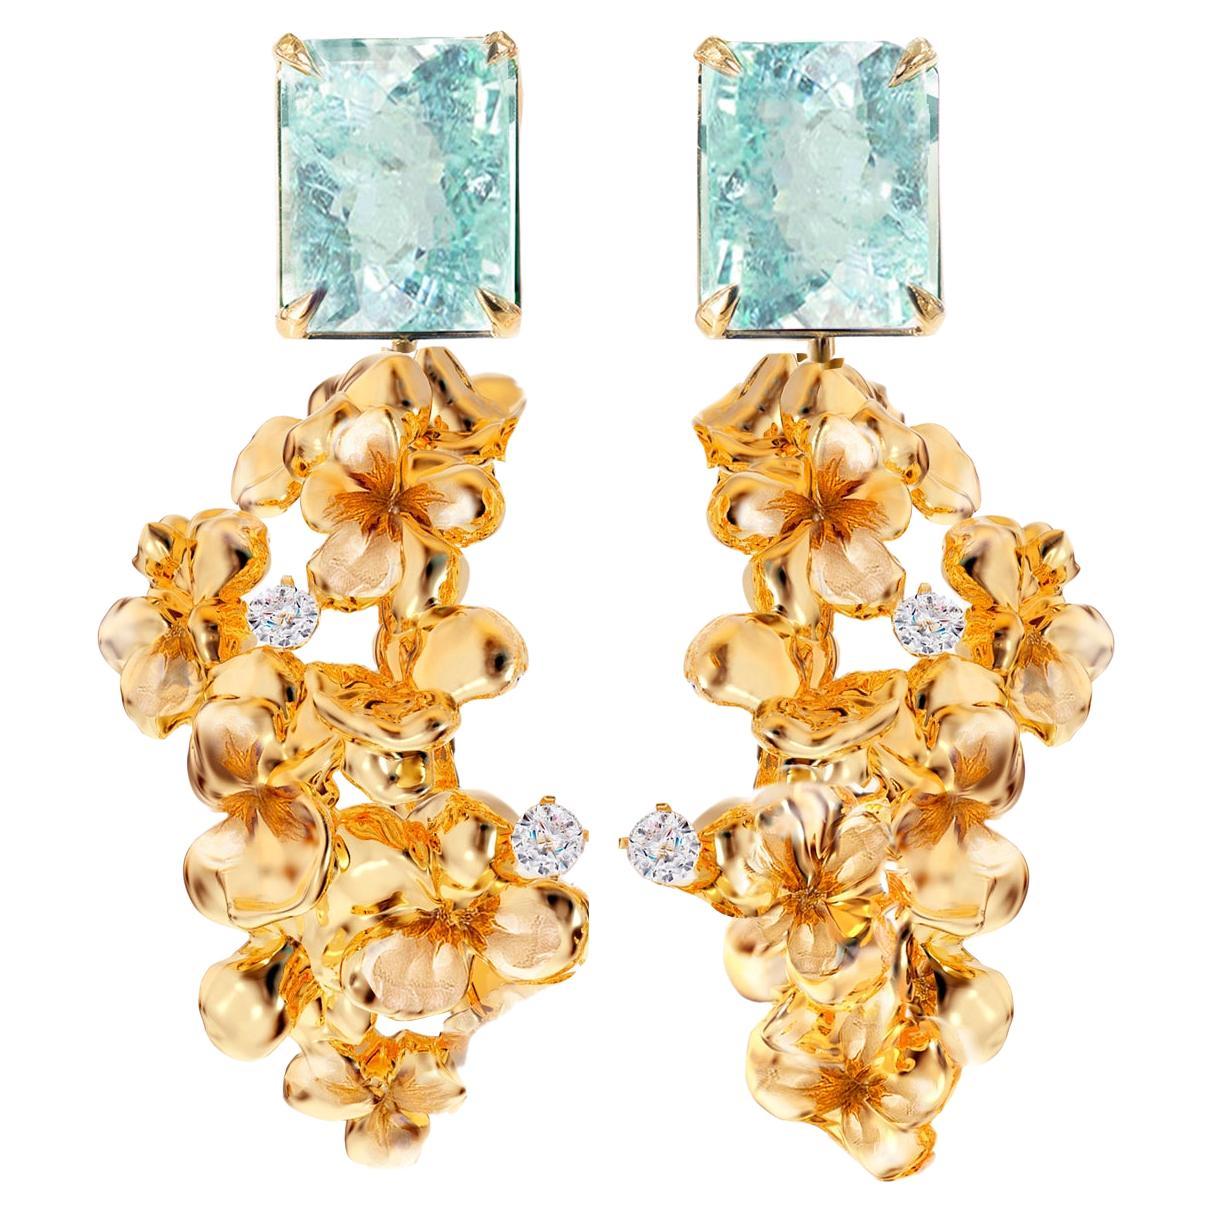 Eighteen Karat Yellow Gold Earrings with Diamonds and Paraiba Tourmalines